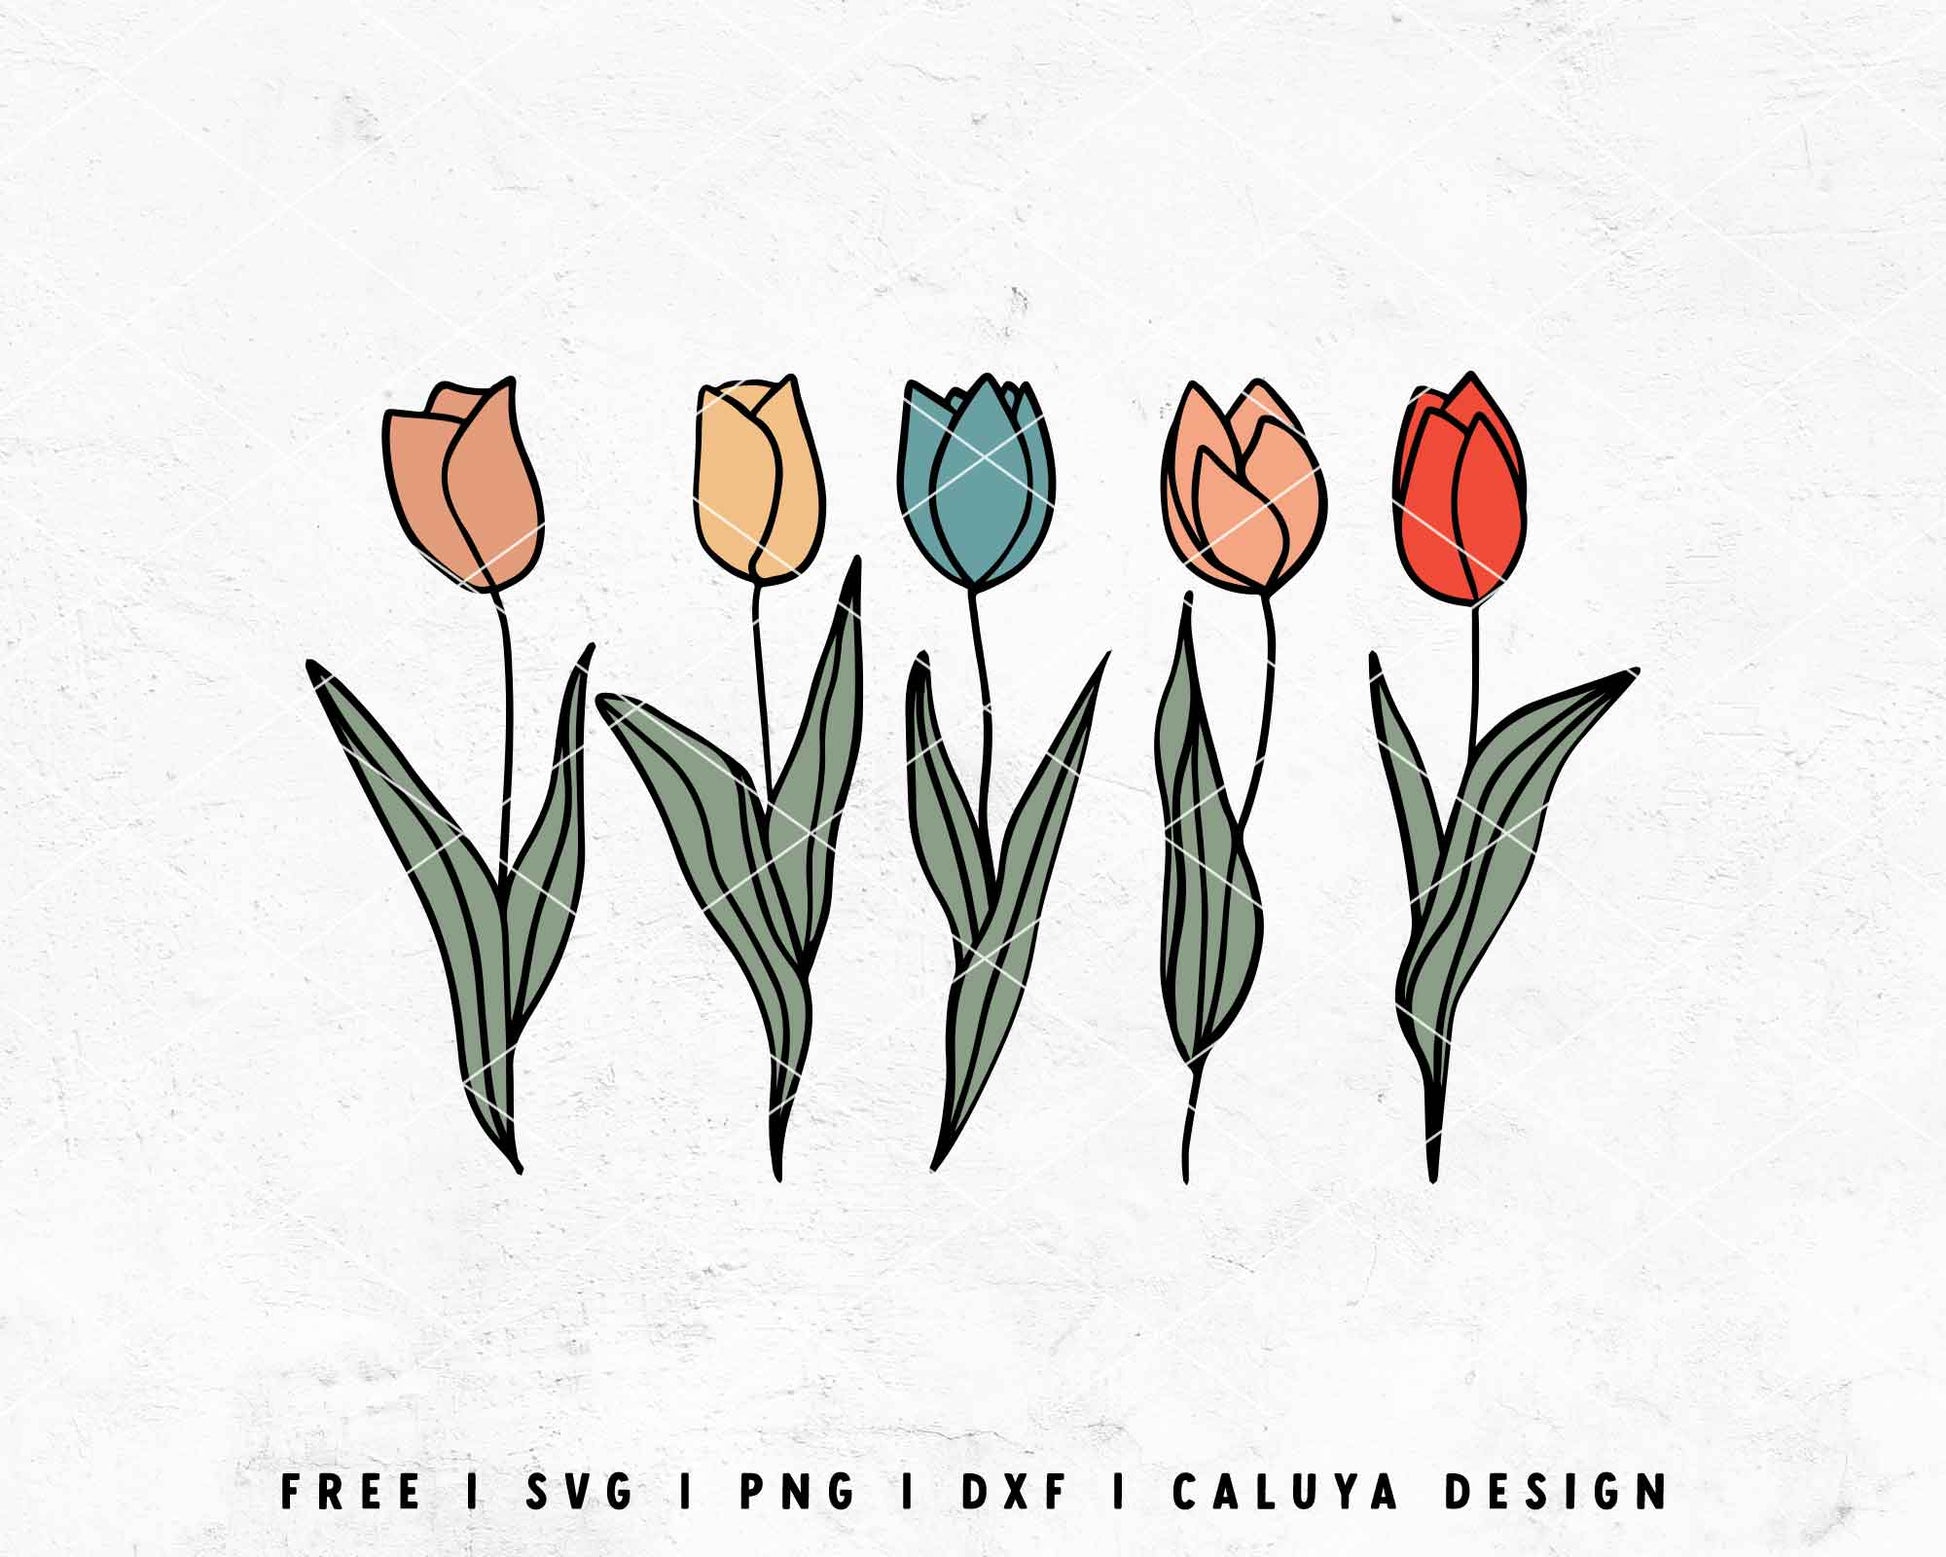 FREE Tulip SVG | Floral SVG | Flower SVG Cut File for Cricut, Cameo Silhouette | Free SVG Cut File